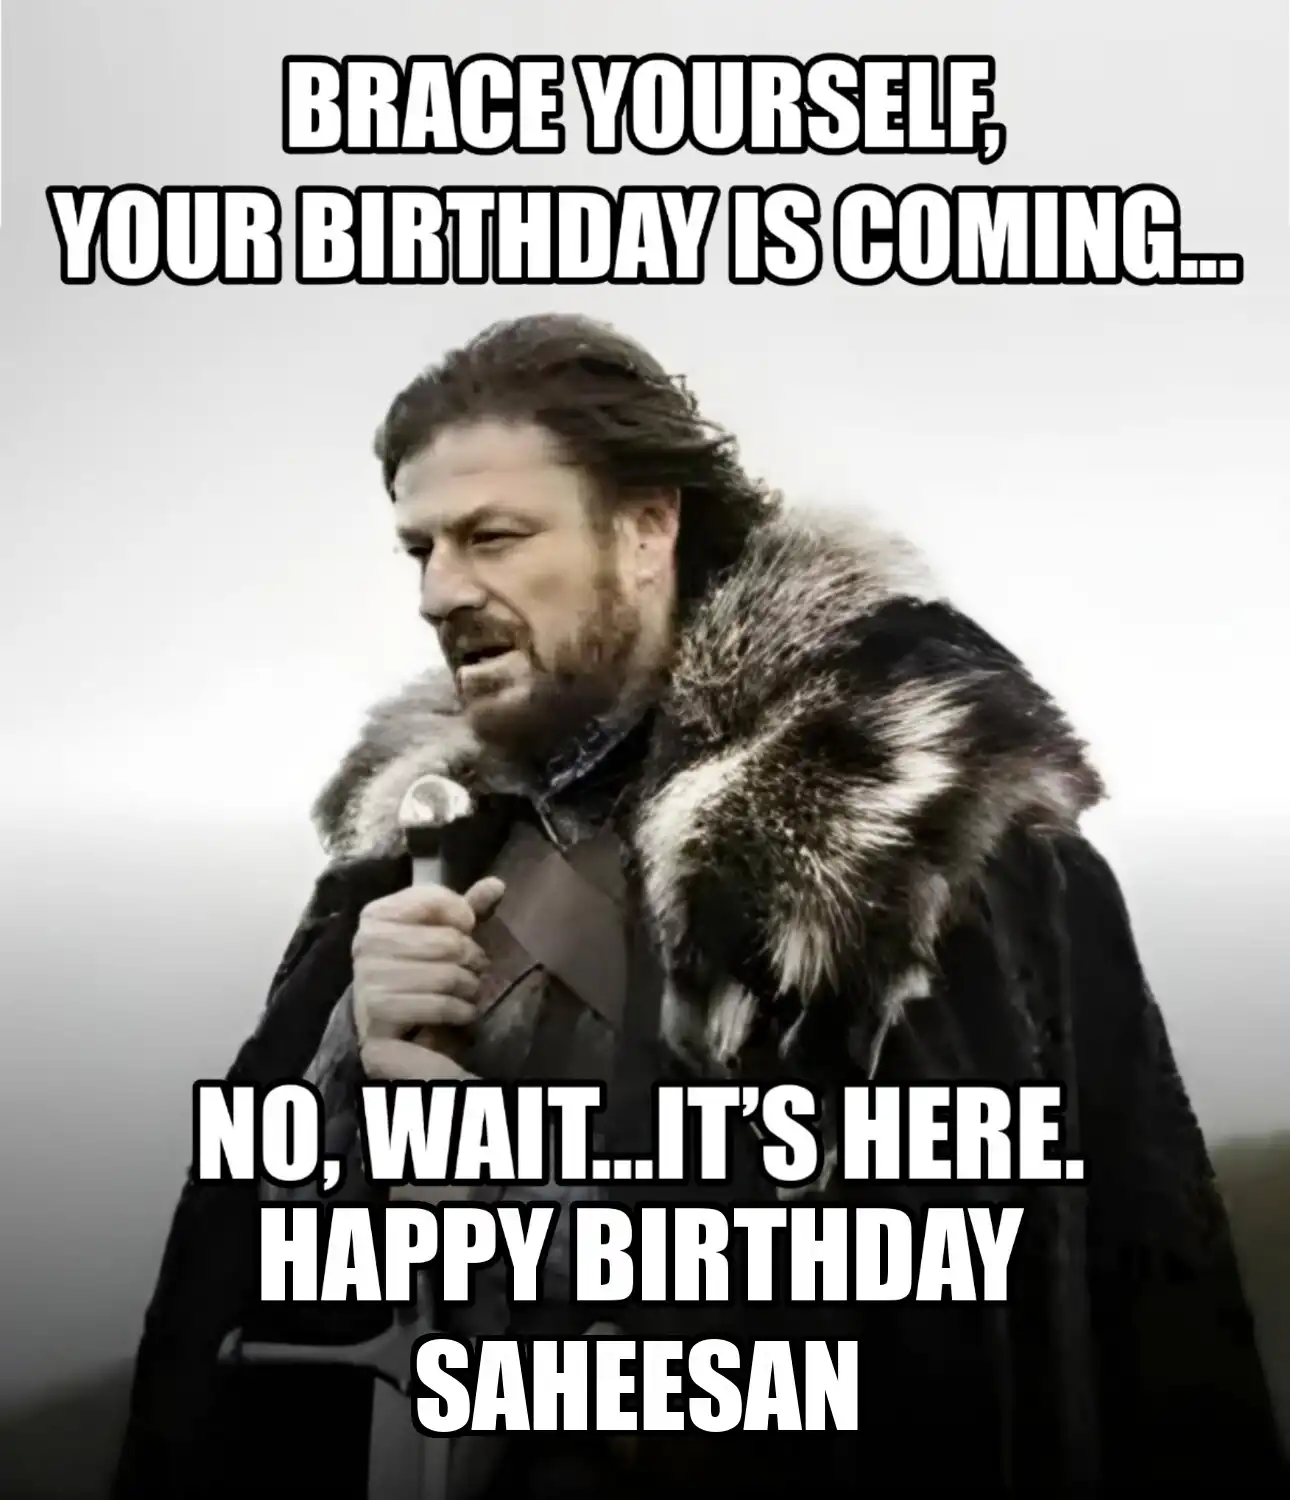 Happy Birthday Saheesan Brace Yourself Your Birthday Is Coming Meme